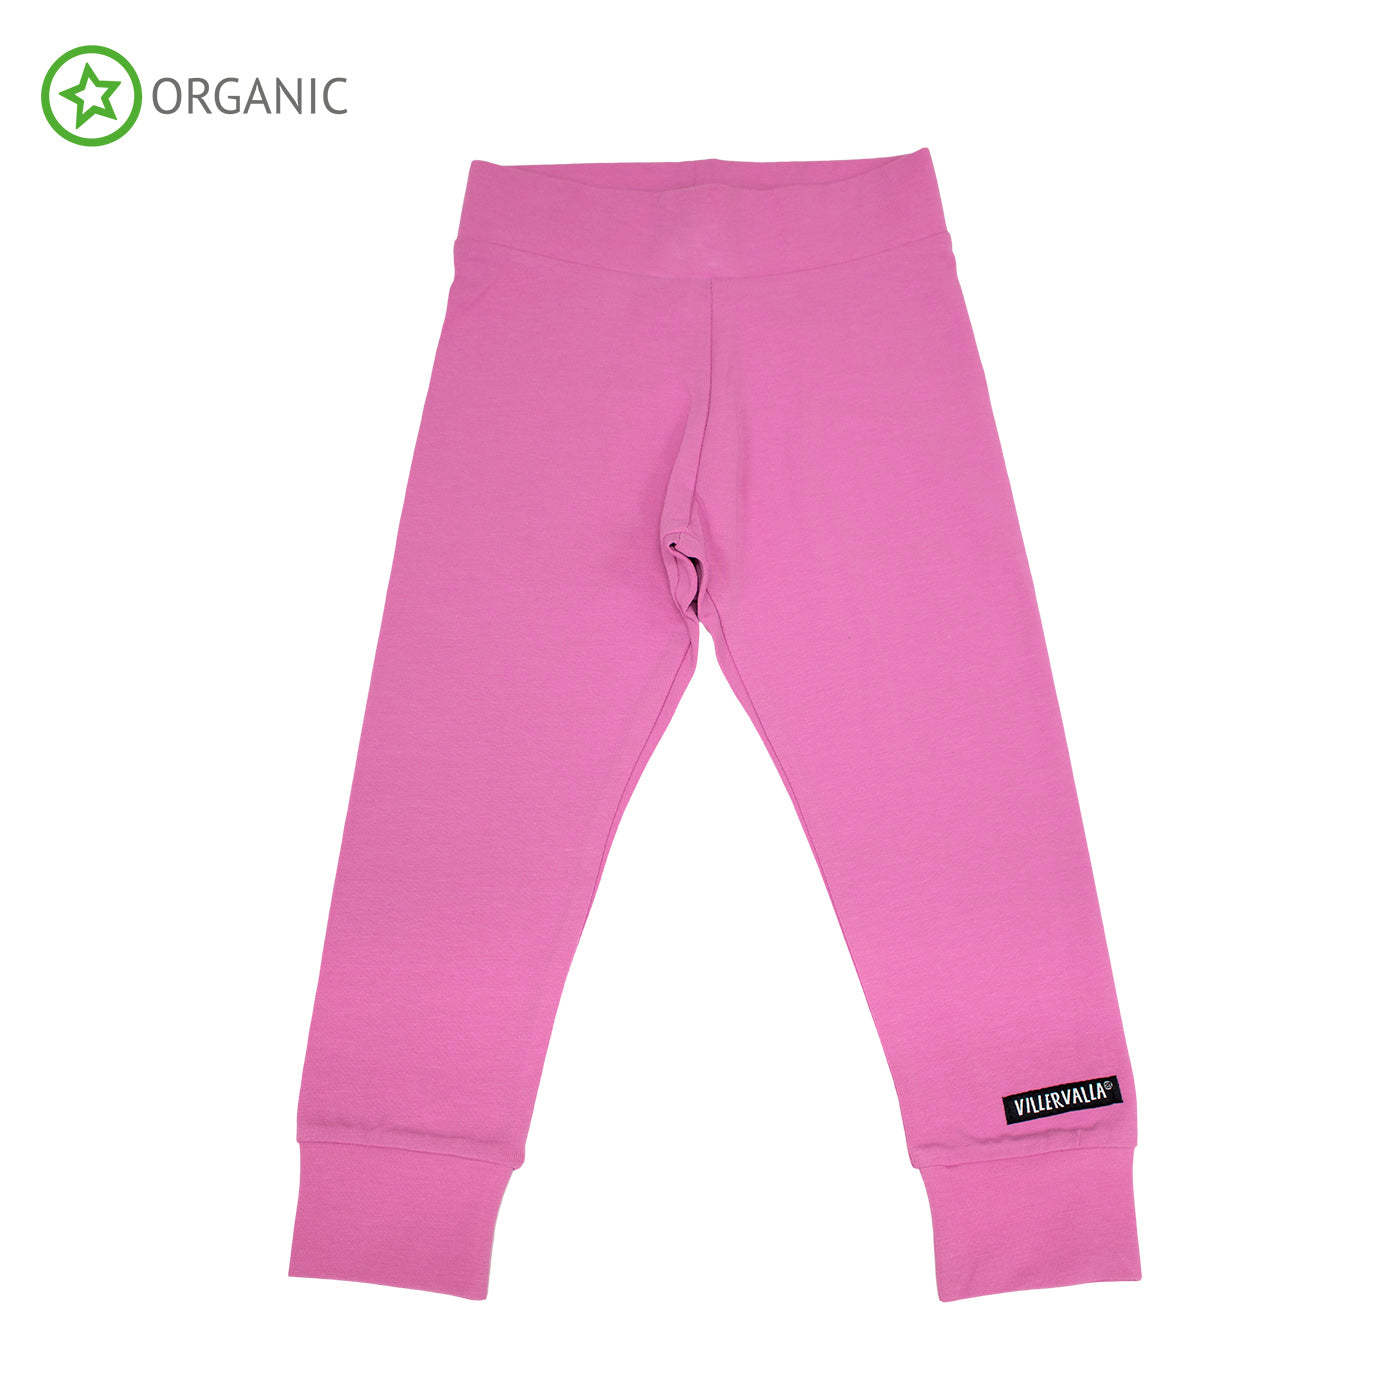 PRICE DROP * Villervalla - Solid Basics - Tapered Pants - Petunia (Pink)